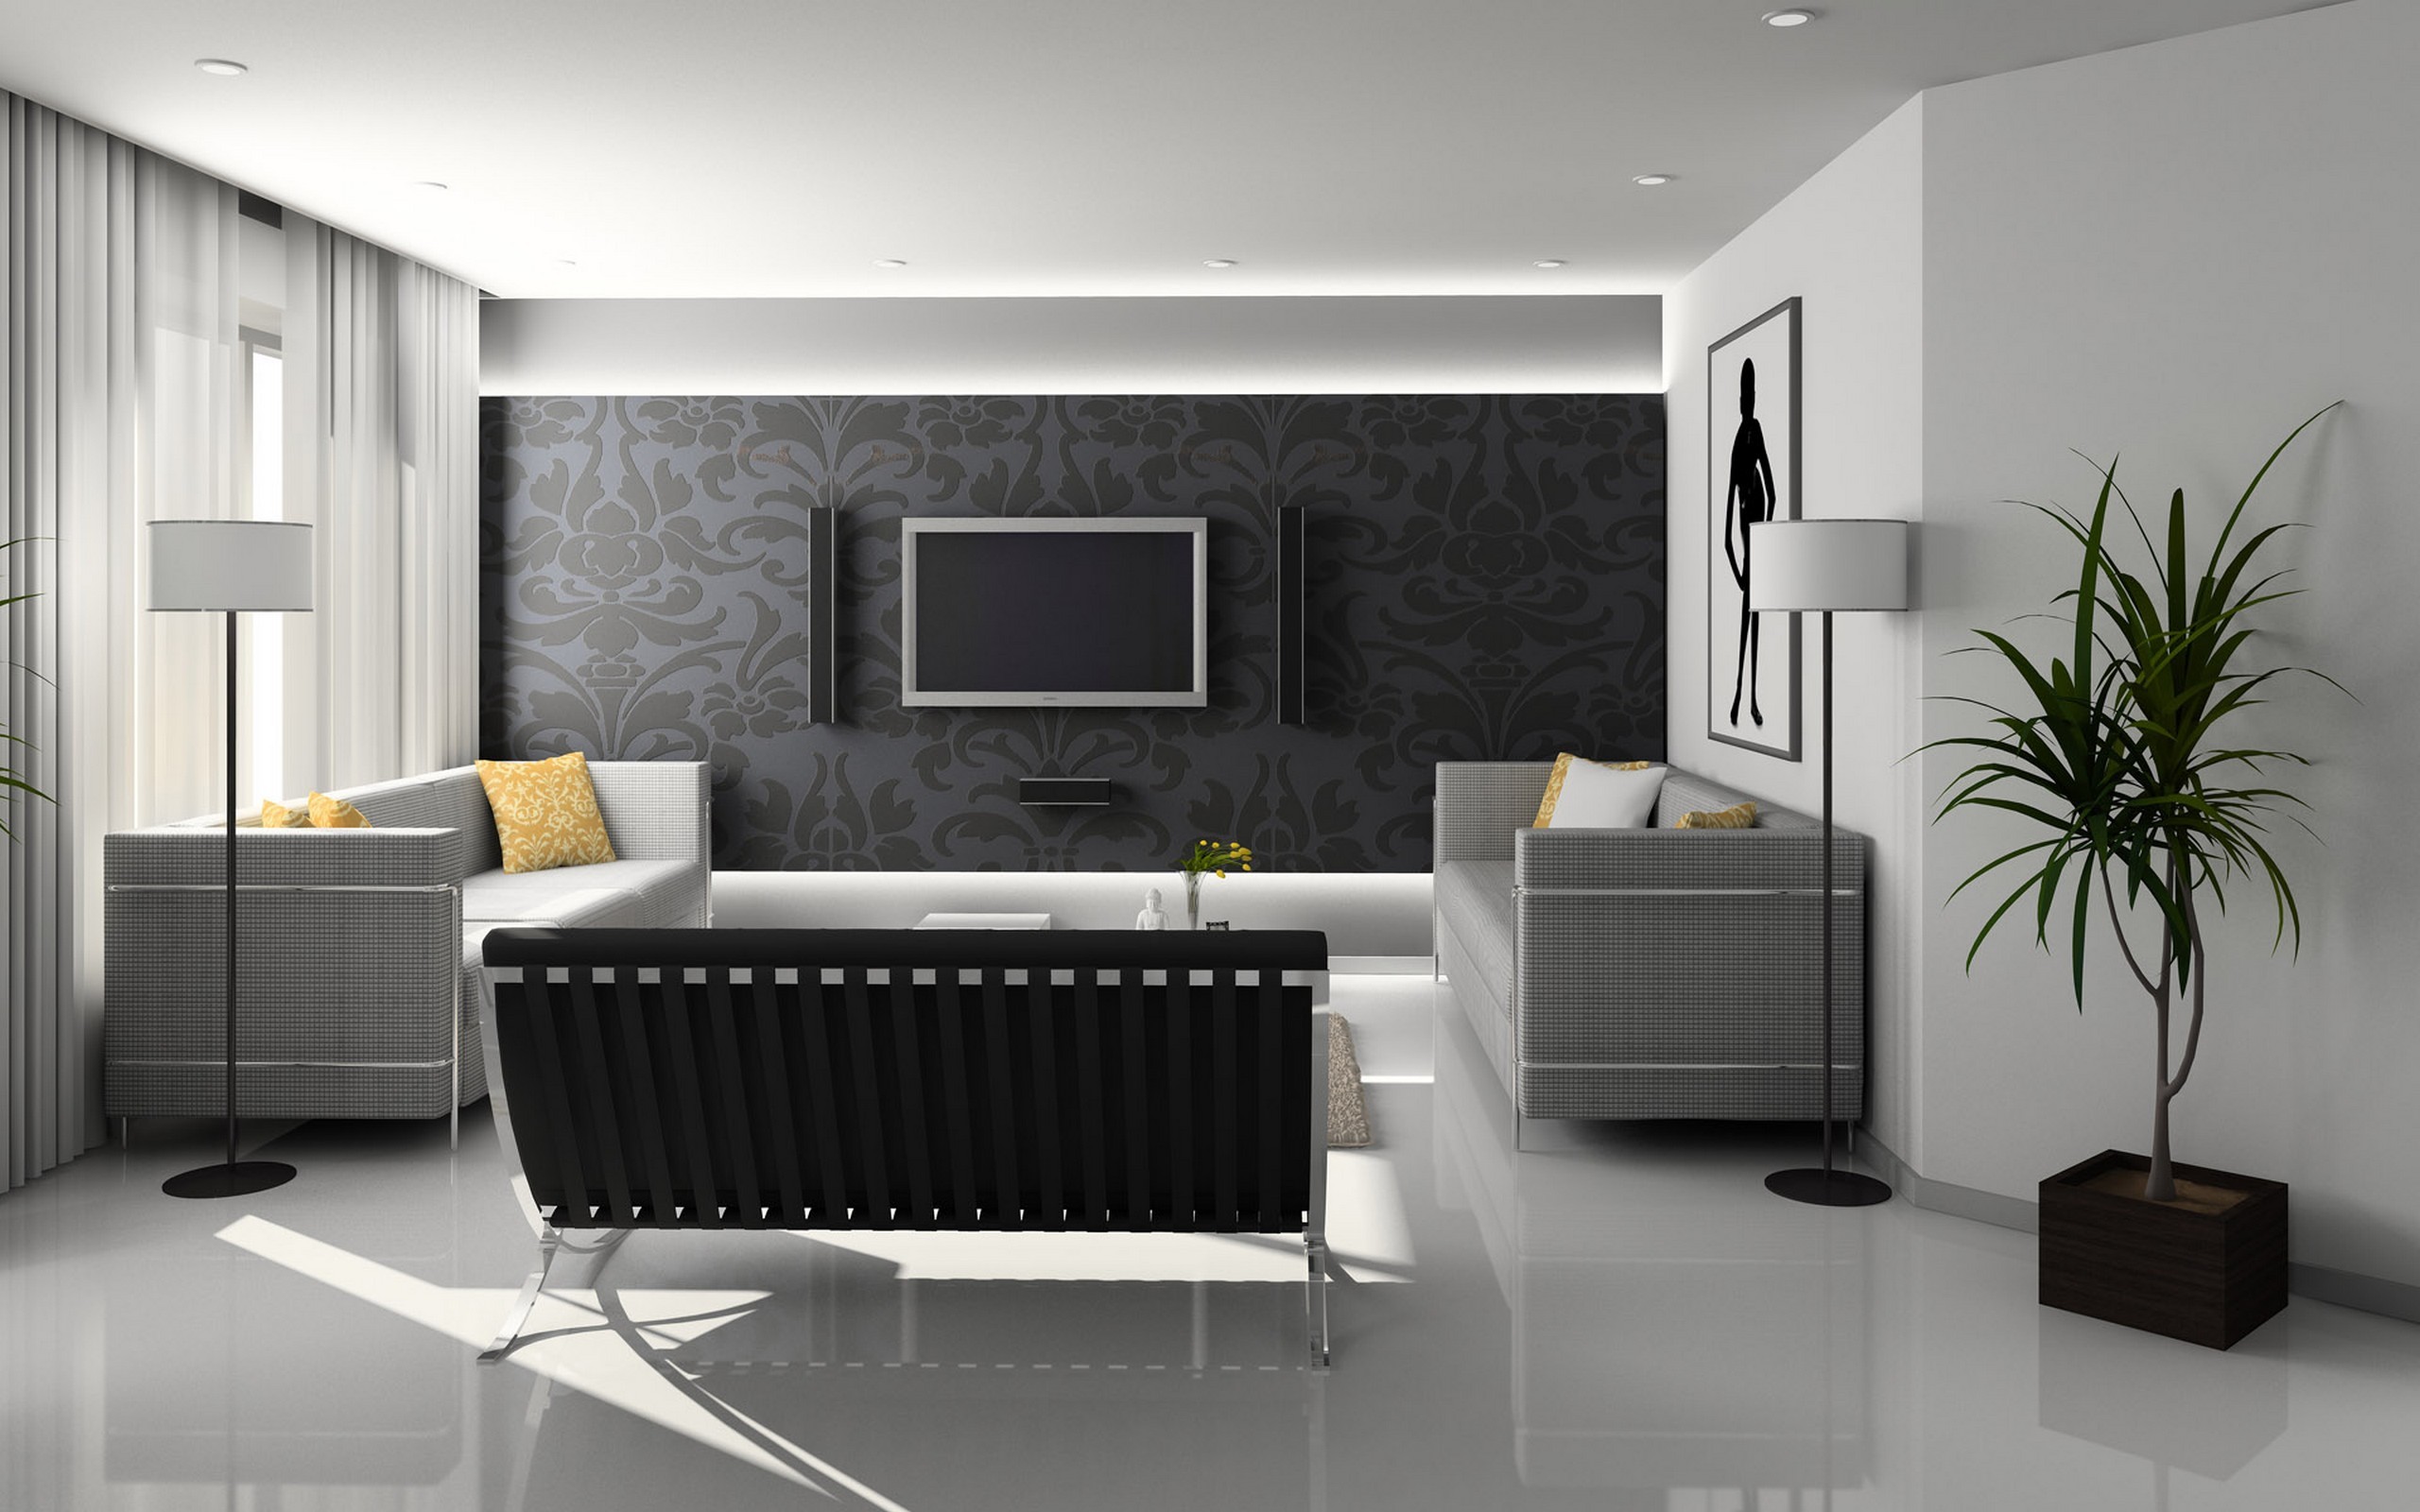 2560x1600 stunning wallpaper designs for living room with elegant black wallpaper  ideas